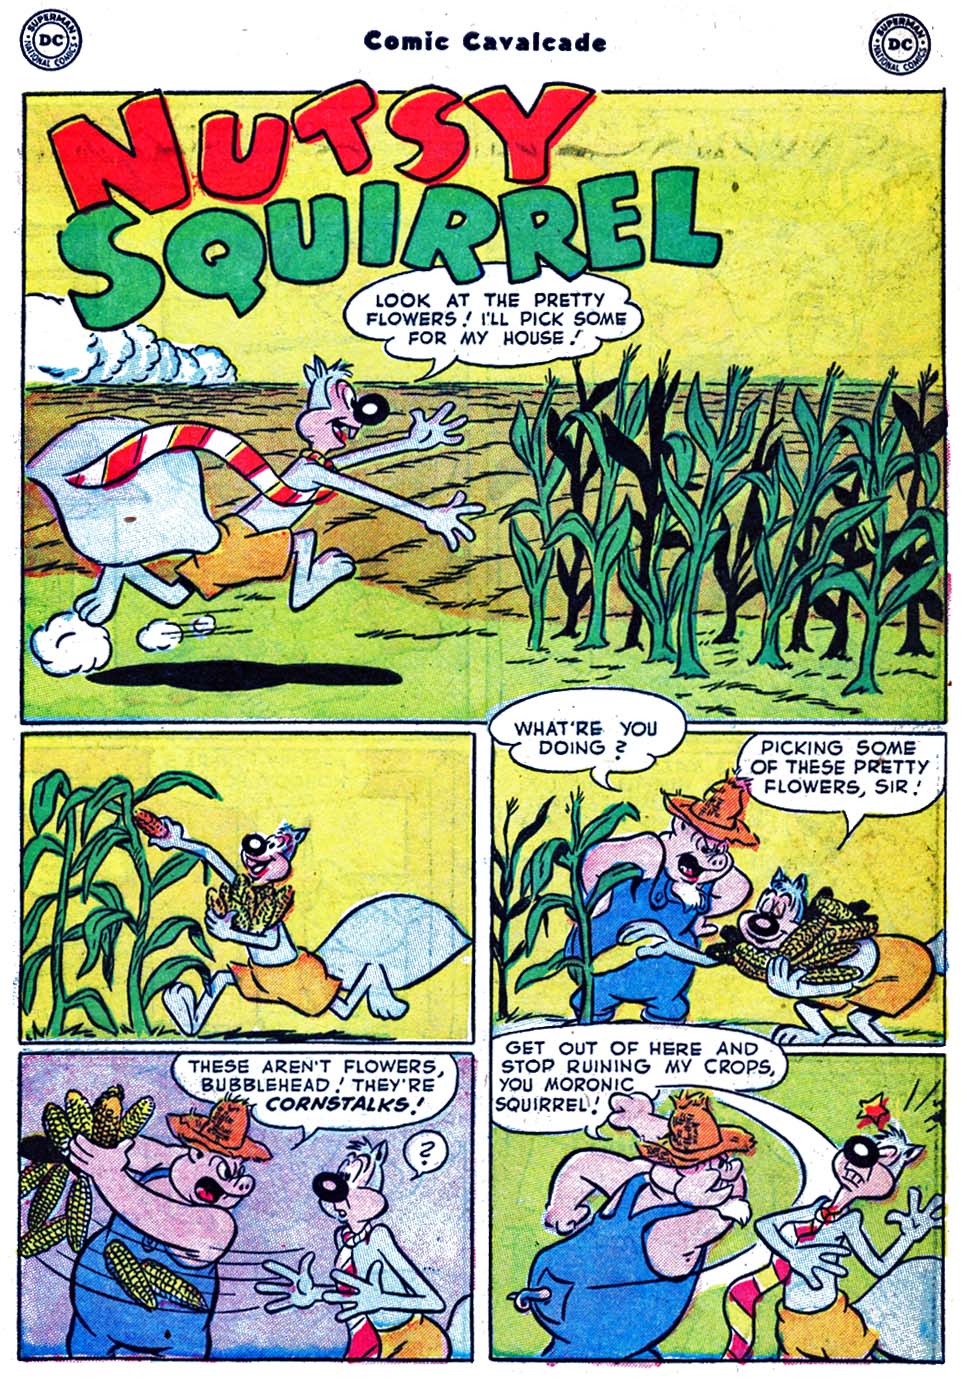 Comic Cavalcade issue 53 - Page 9